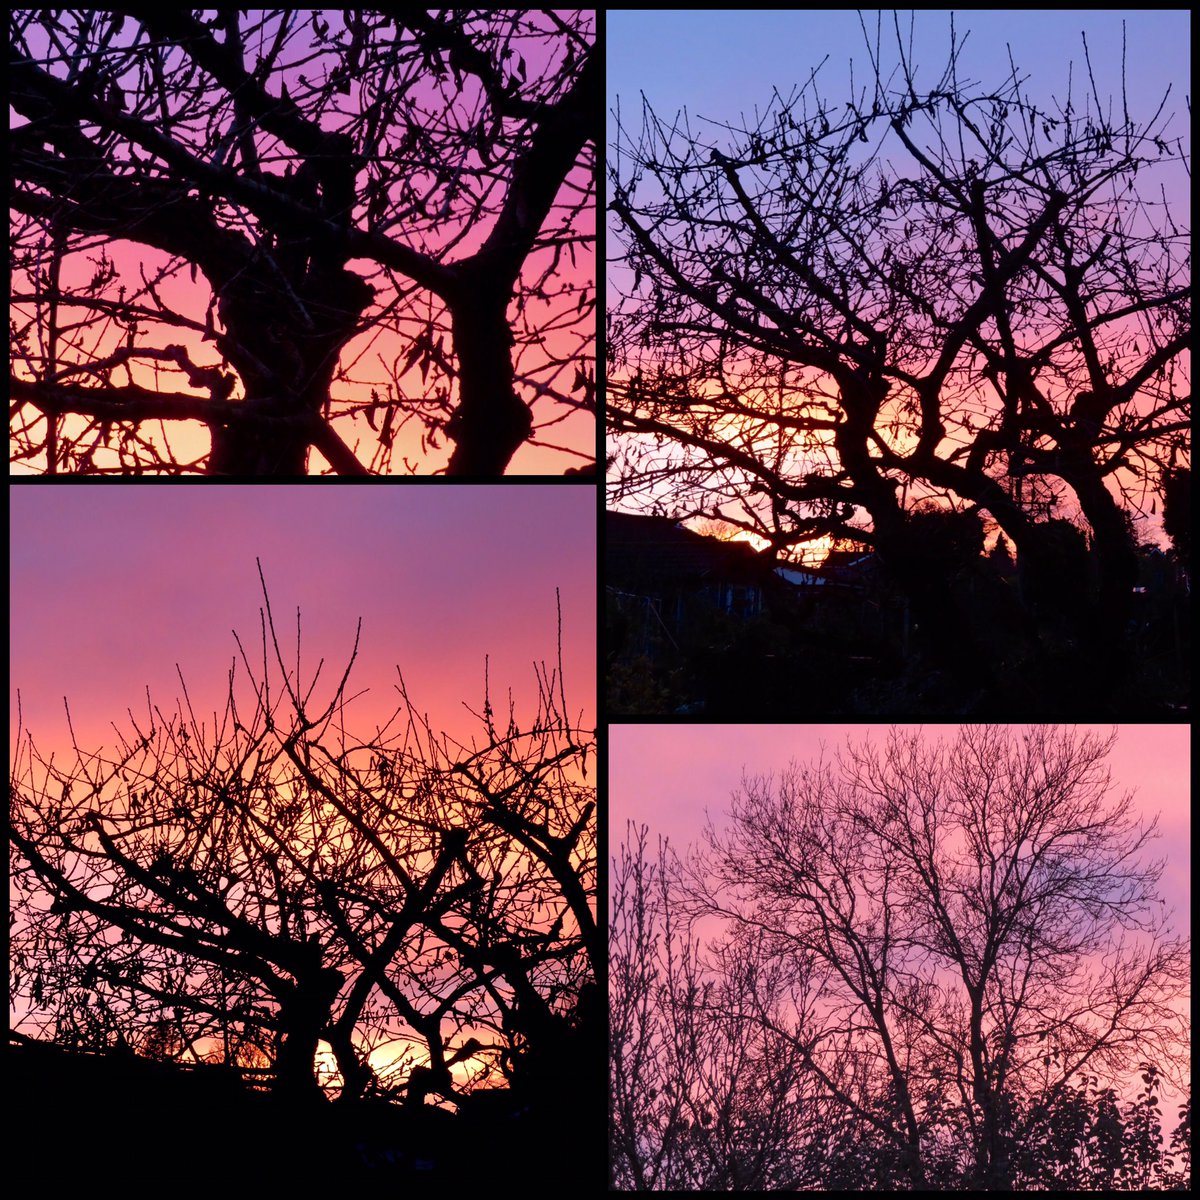 Stunning colours this evening.
#londonsunsets
#sunset
#wintercherrytree
#decemberblues